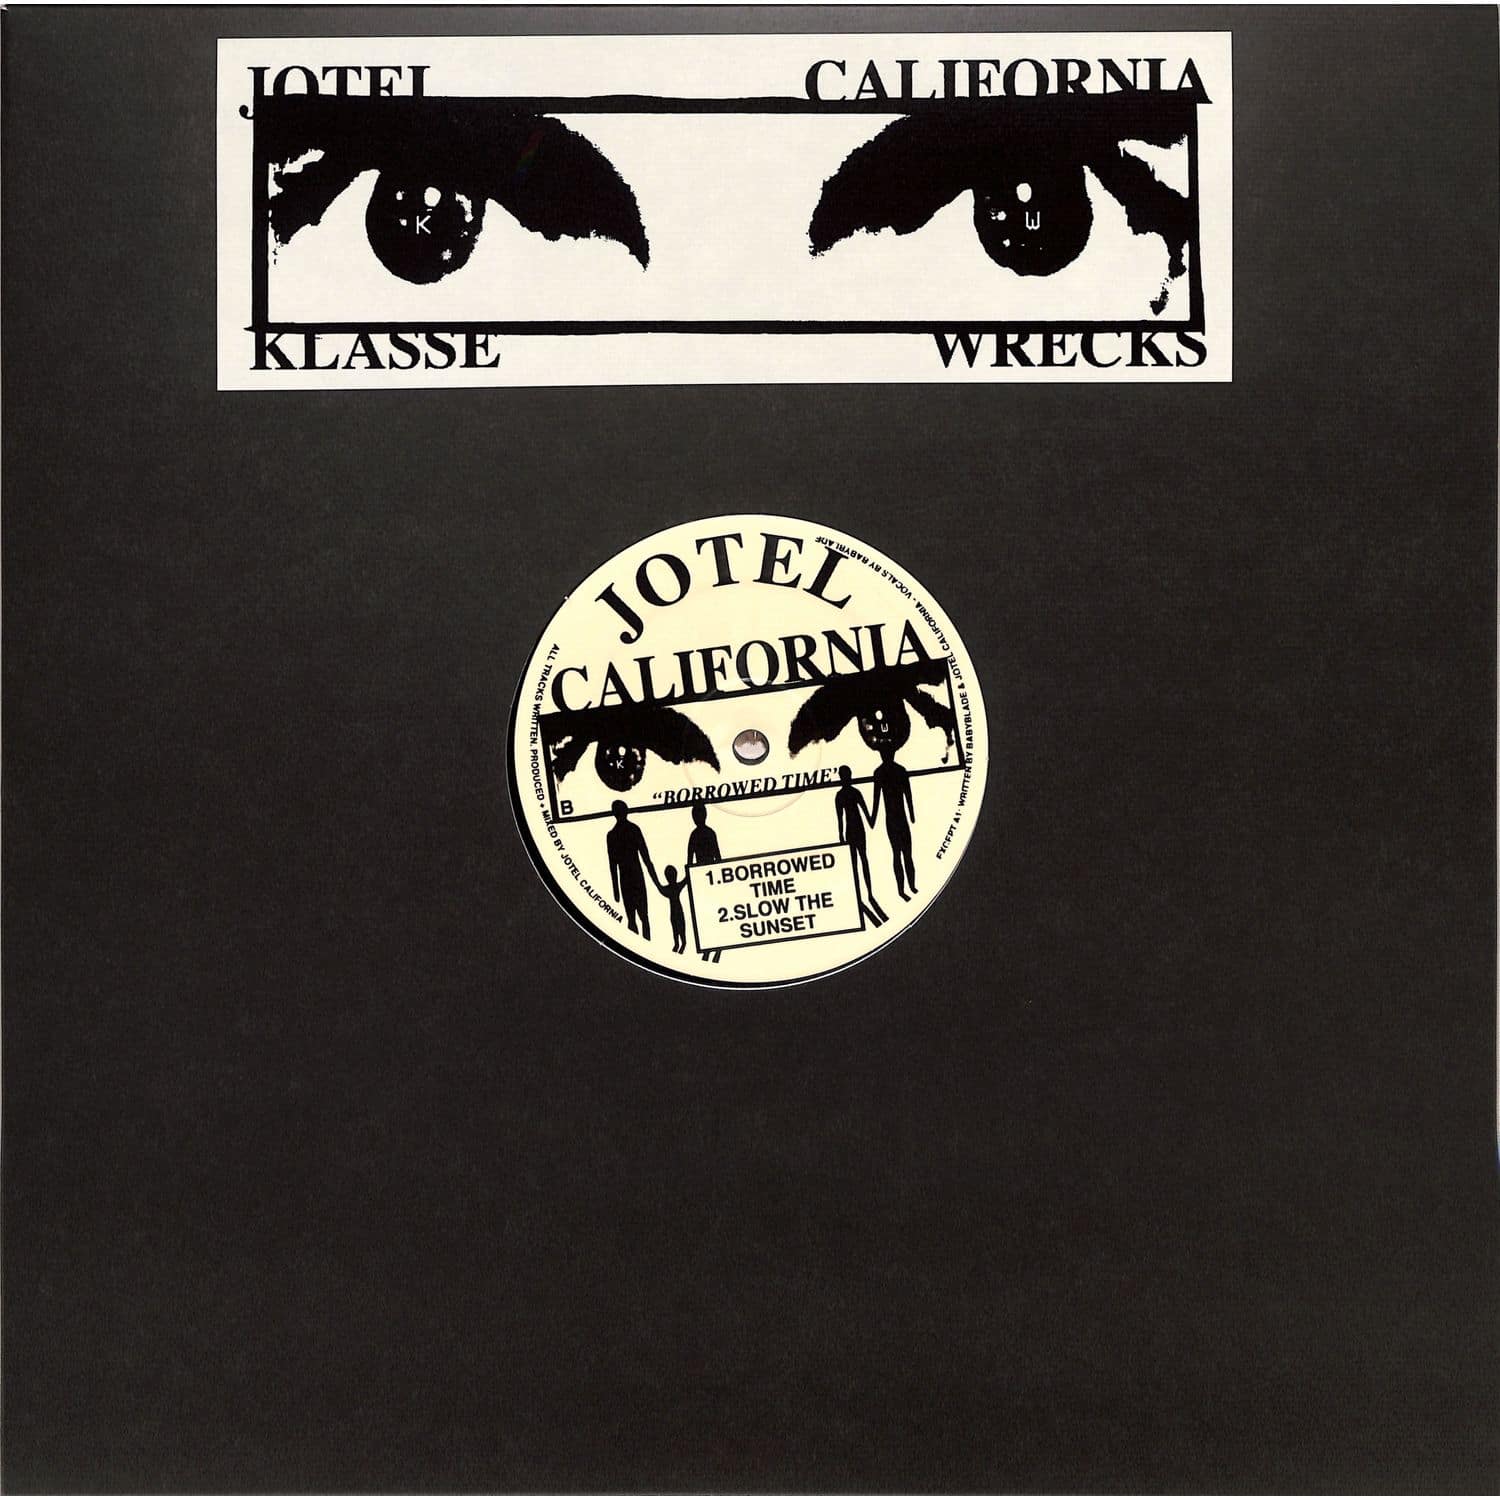 Jotel California - BORROWED TIME EP